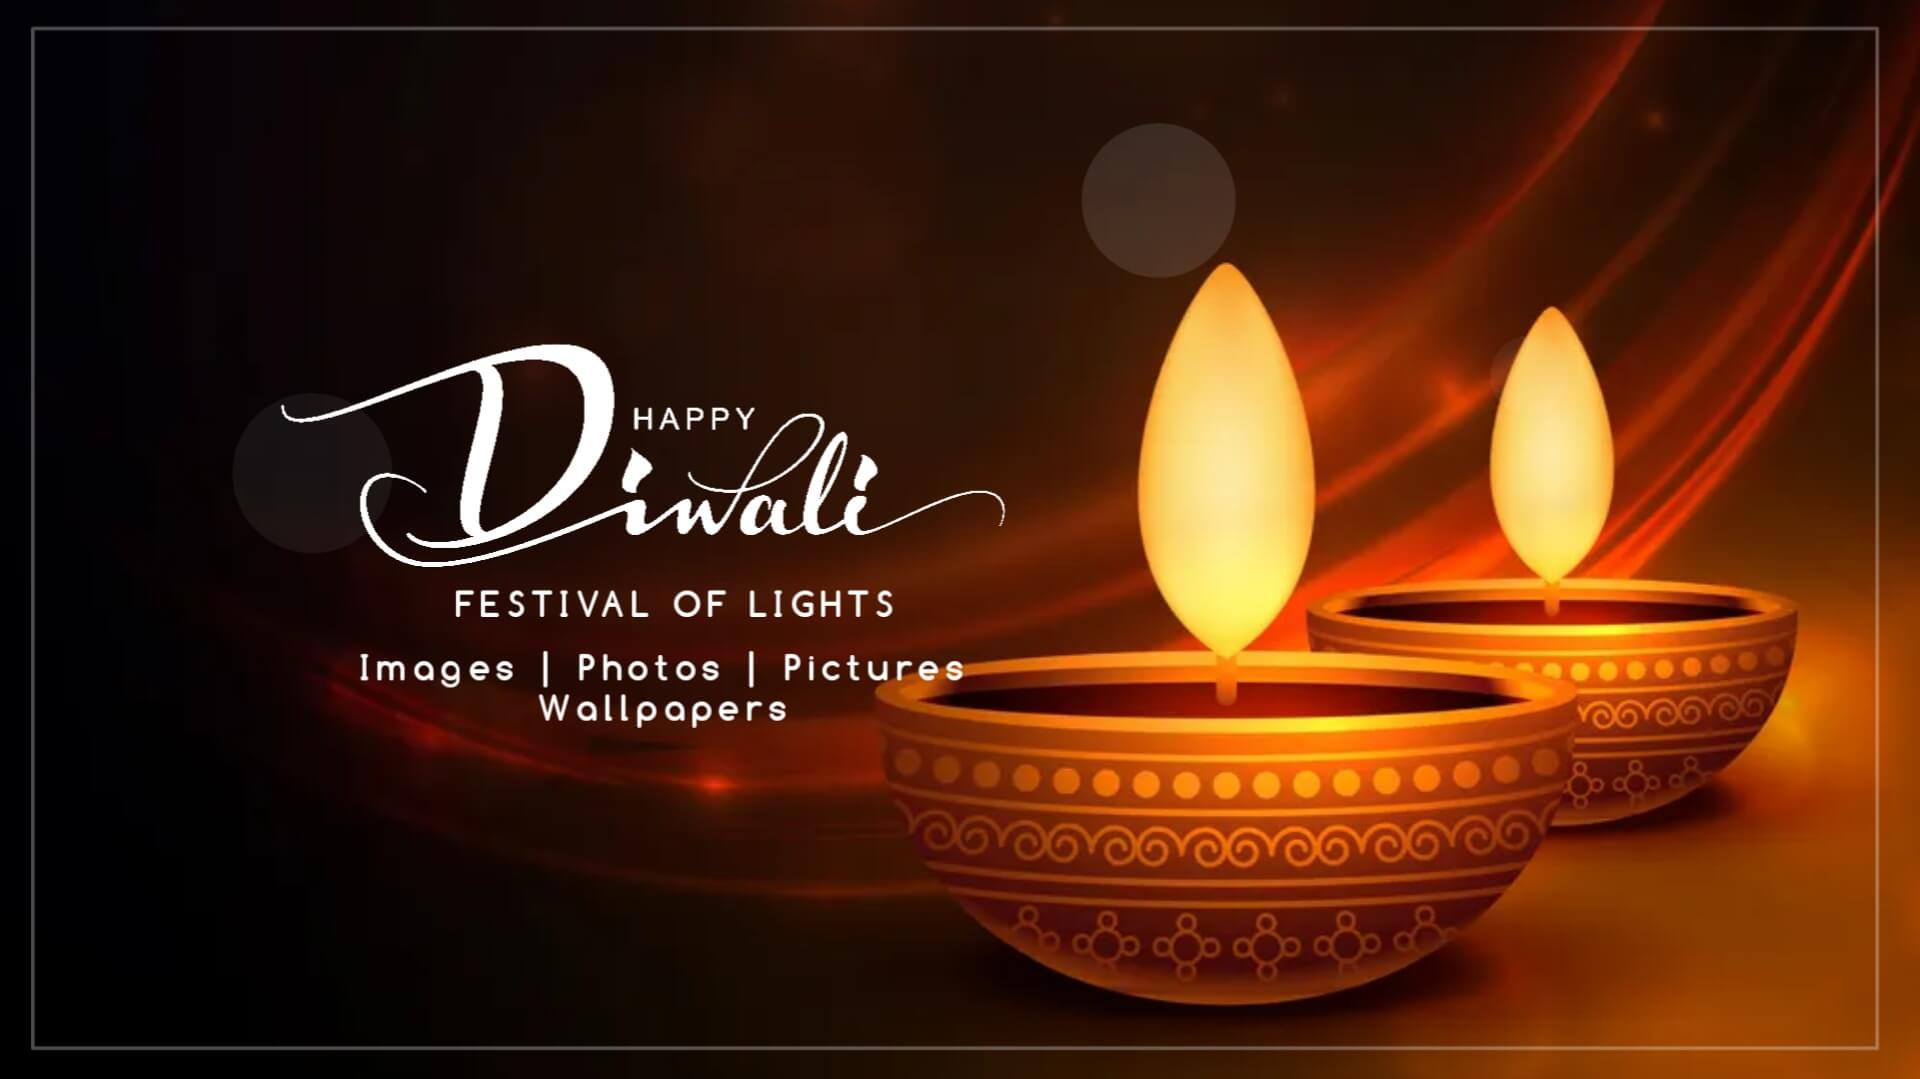 happy diwali 2015 wallpaper | Diwali greetings, Diwali wishes, Diwali images